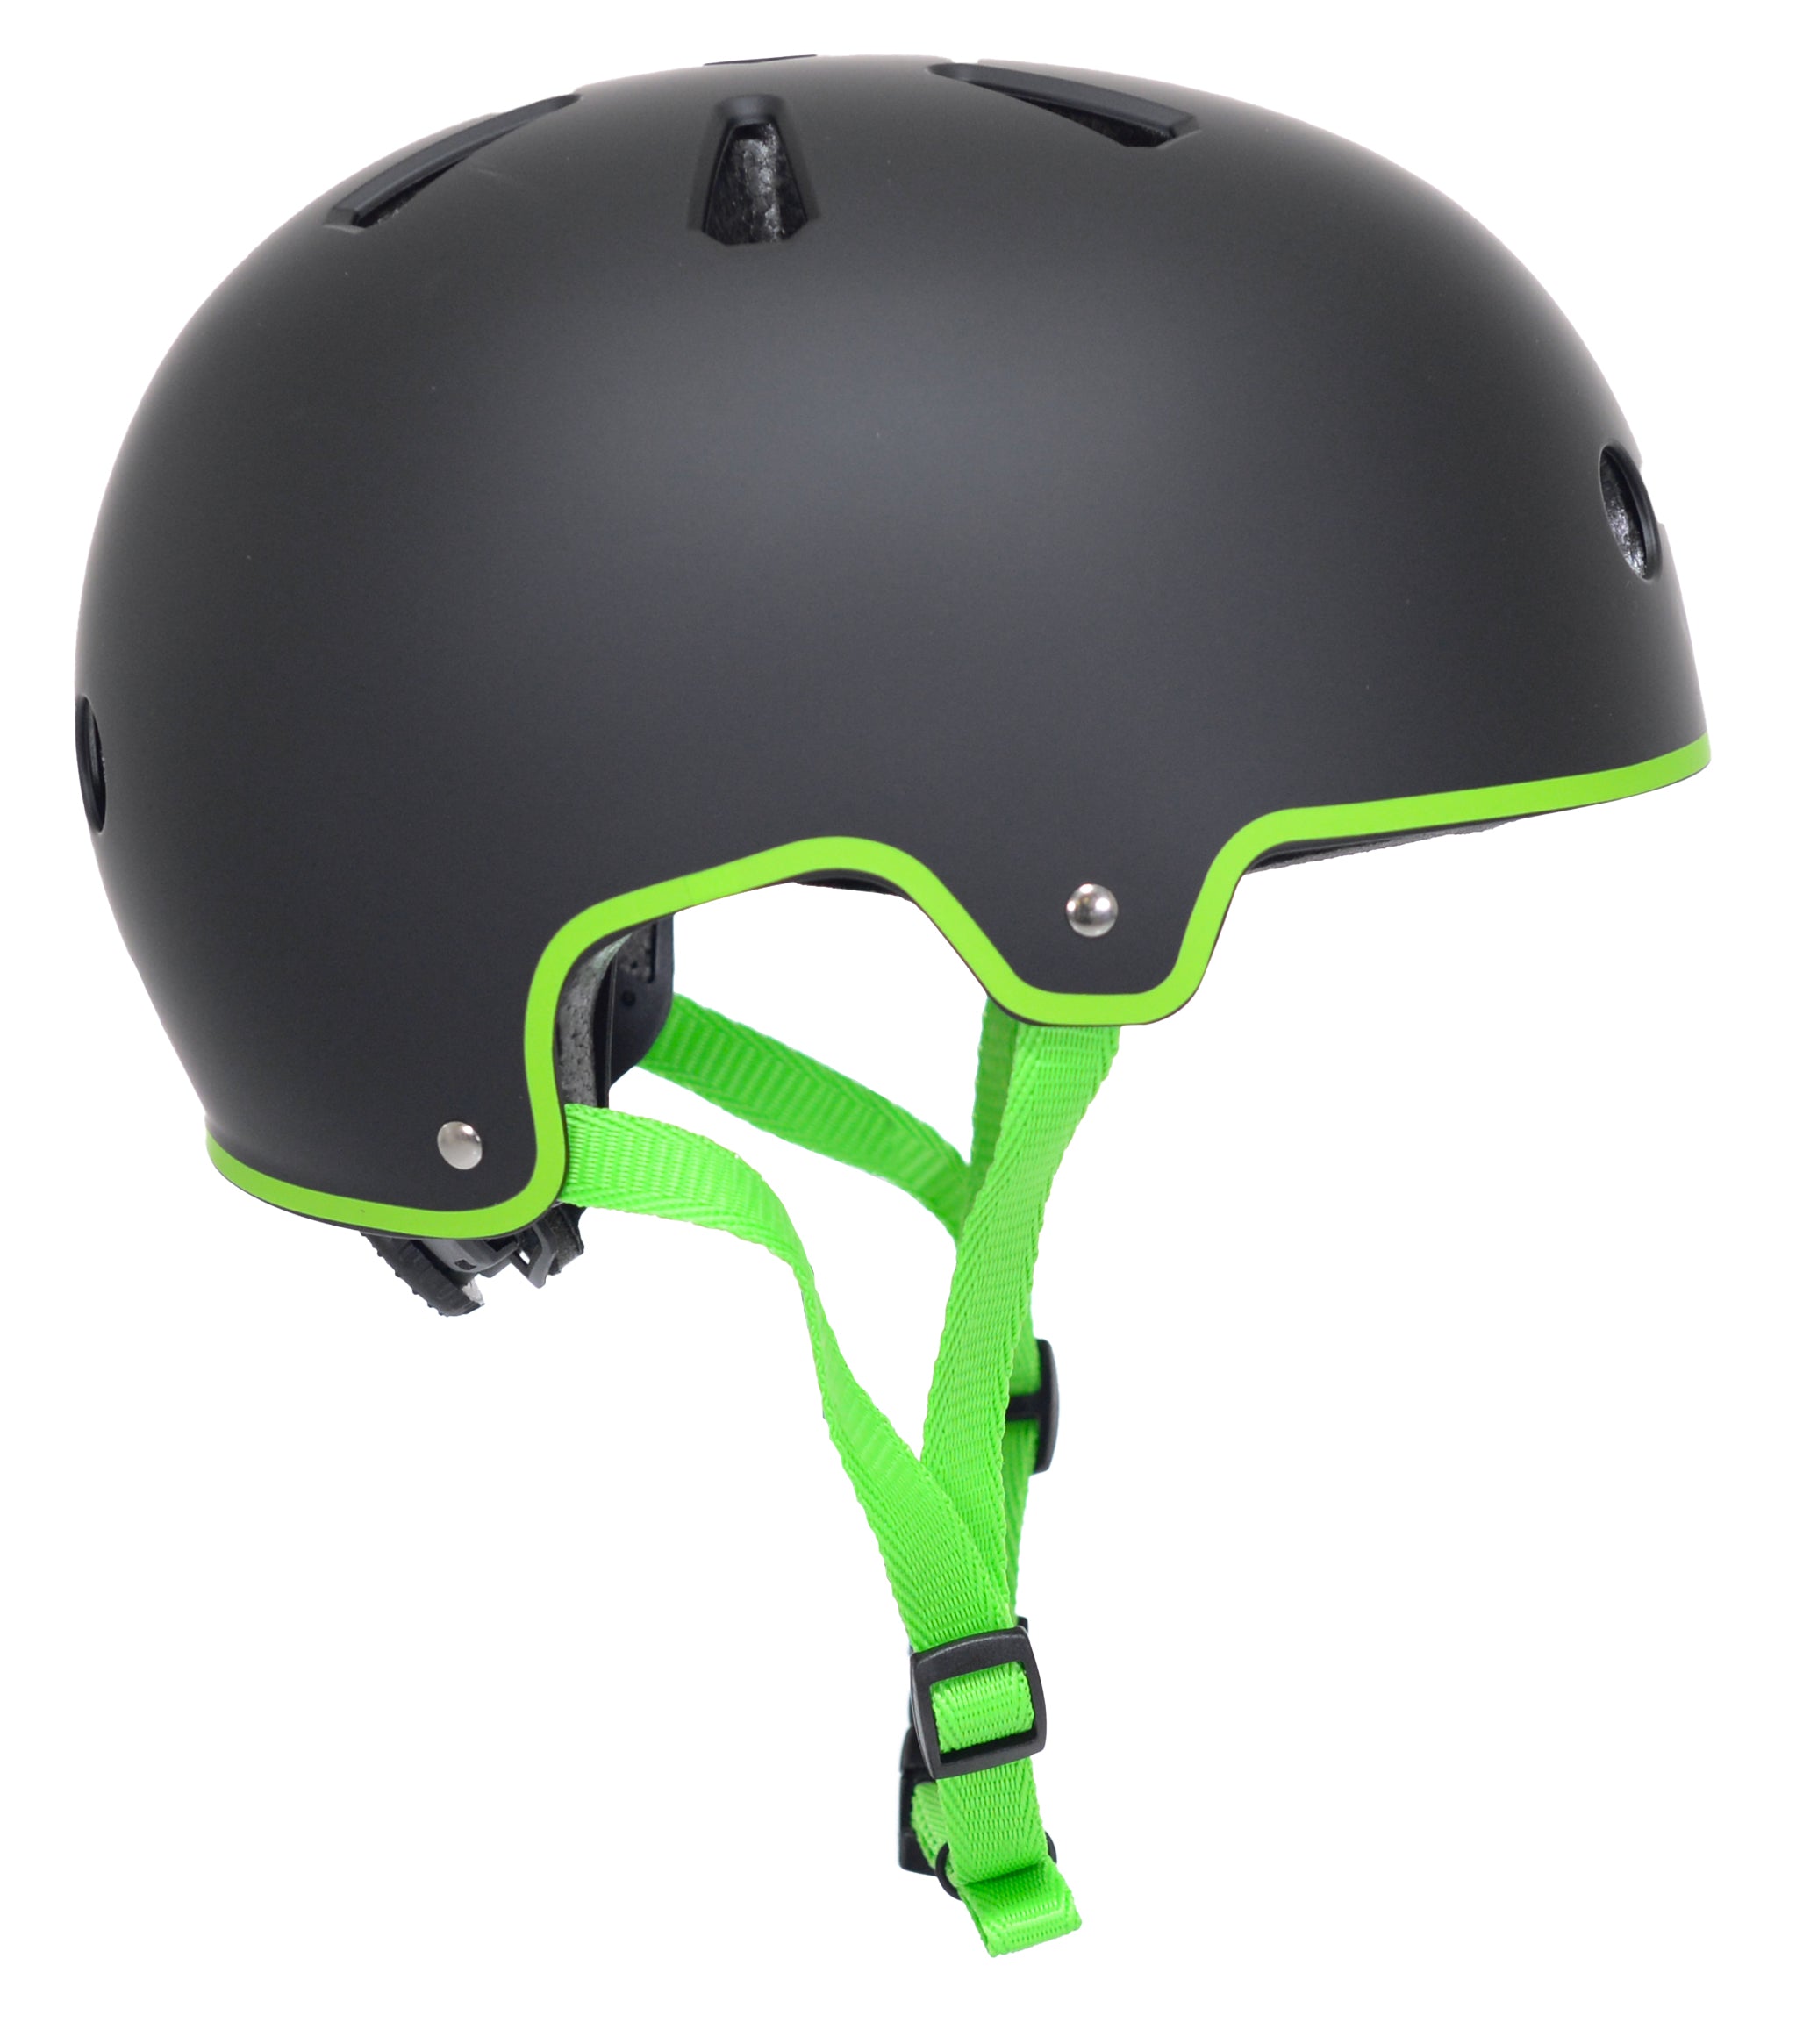 Kazam Child Bike Helmet